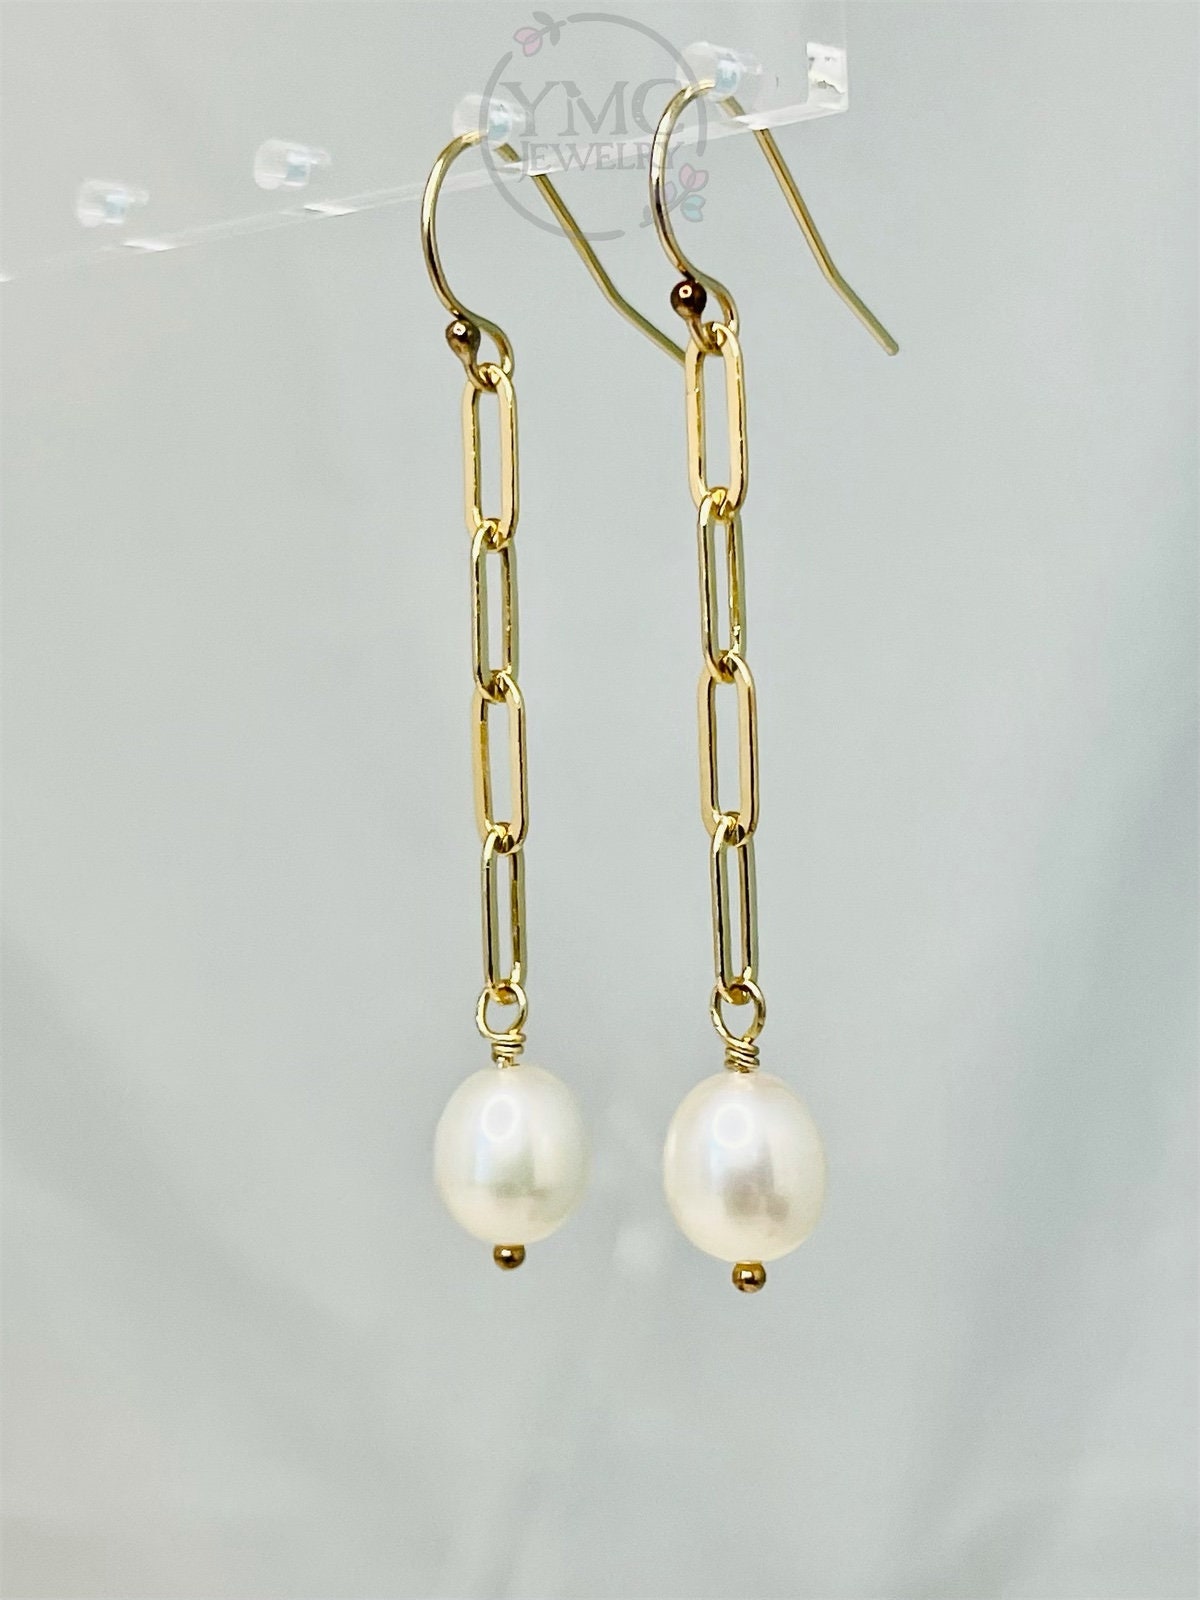 Gold Sequin Chain Earrings,Gold Chain Earrings,Golden Chain Disc Earrings,Small Gold Circle Earrings,Connected circle earrings,Disk Dangle